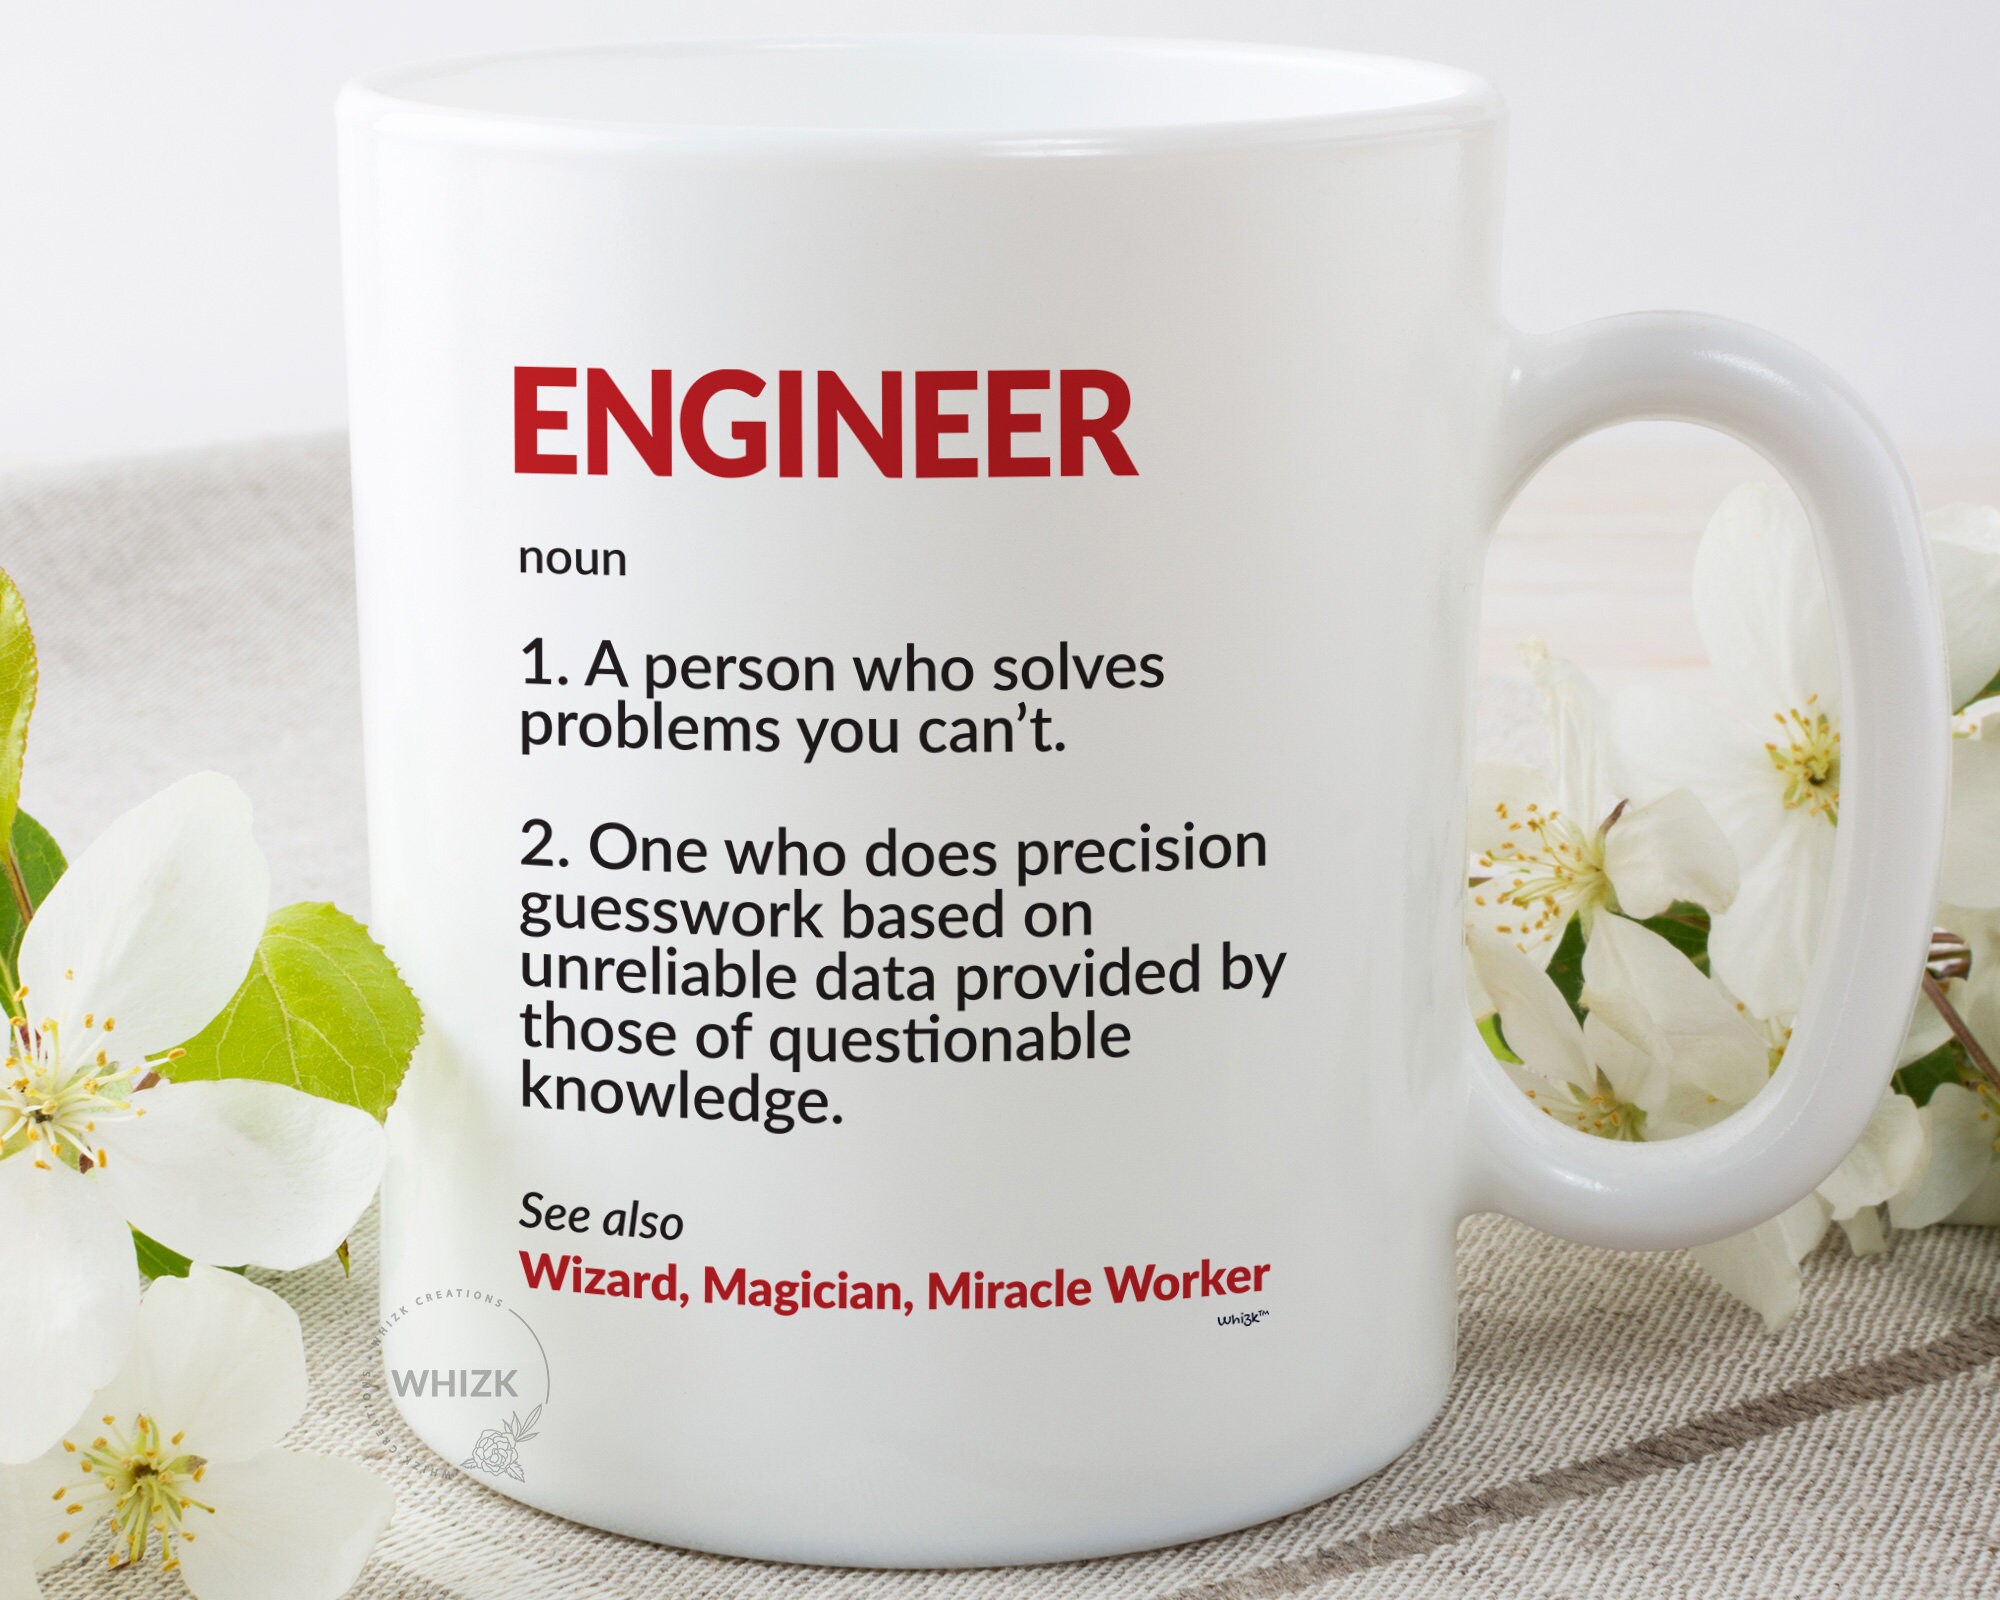 Engineer Gifts – Funny Coffee Mug Engineer Gifts For Men, Co